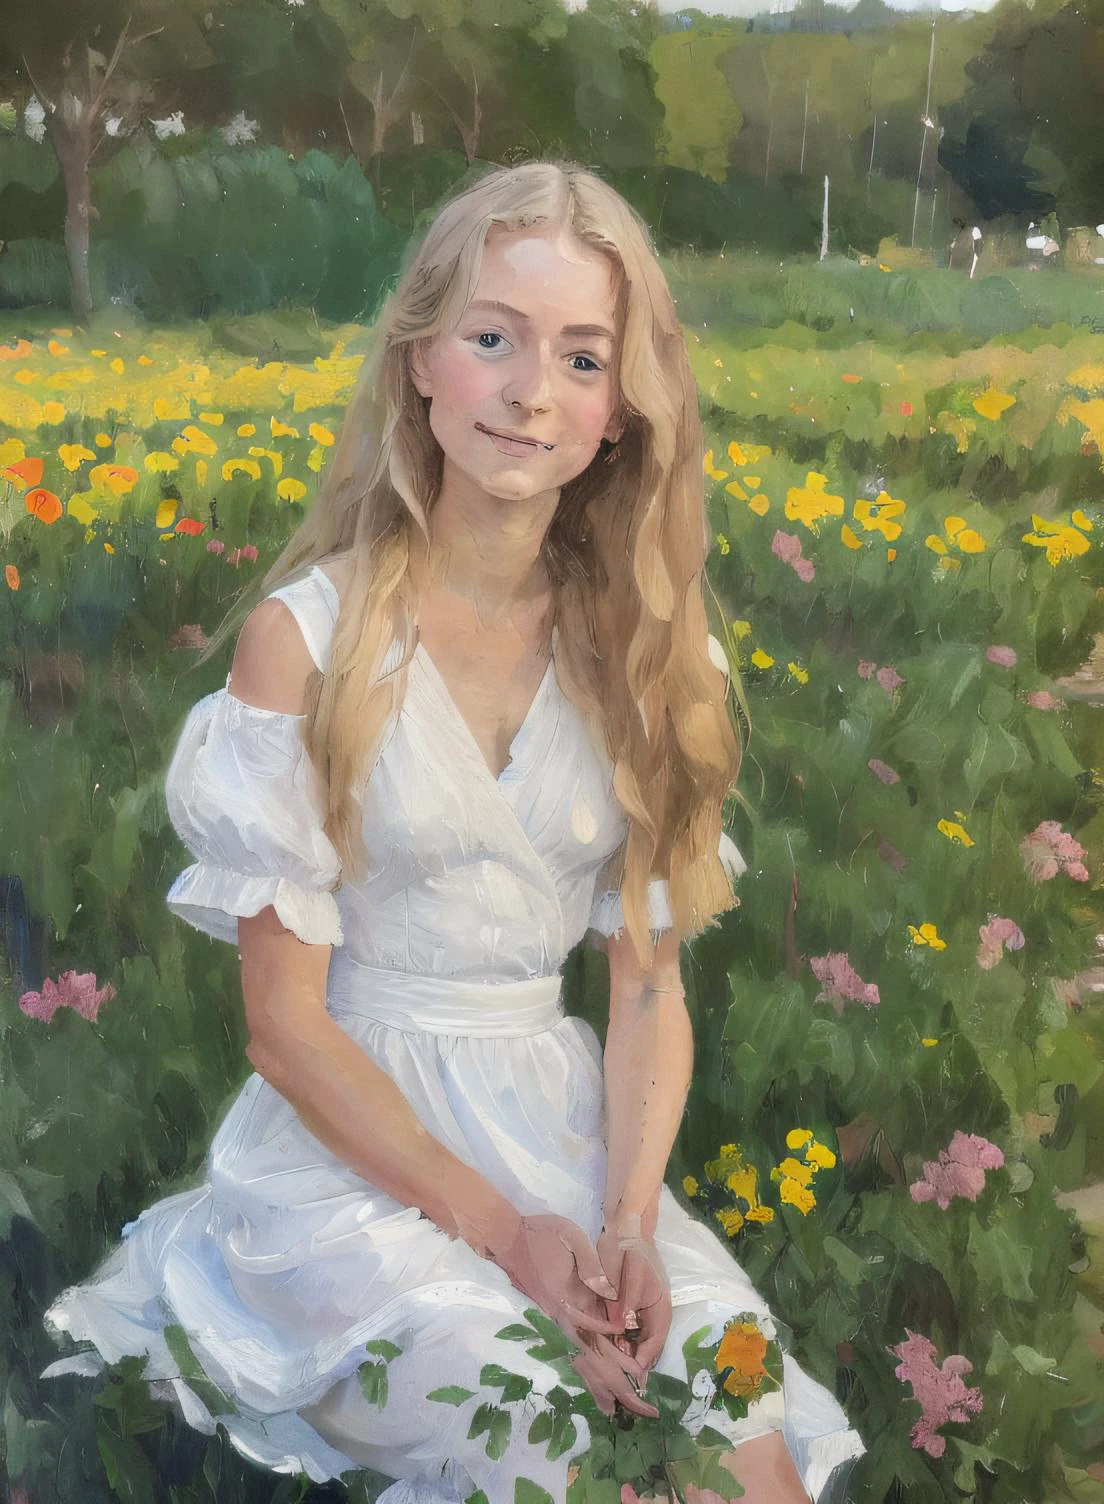 (MSE의 그림) (붓놀림) (걸작, 최고의 품질), 녹색 식물과 꽃이 있는 들판에 앉아 있는 긴 금발 머리를 가진 18세 소녀와 마주하기 위해 가까이 다가갑니다, 그녀의 손은 그녀의 턱 아래에 있다, 따뜻한 조명, 하얀 드레스, Detaled 얼굴 특징, 연약한